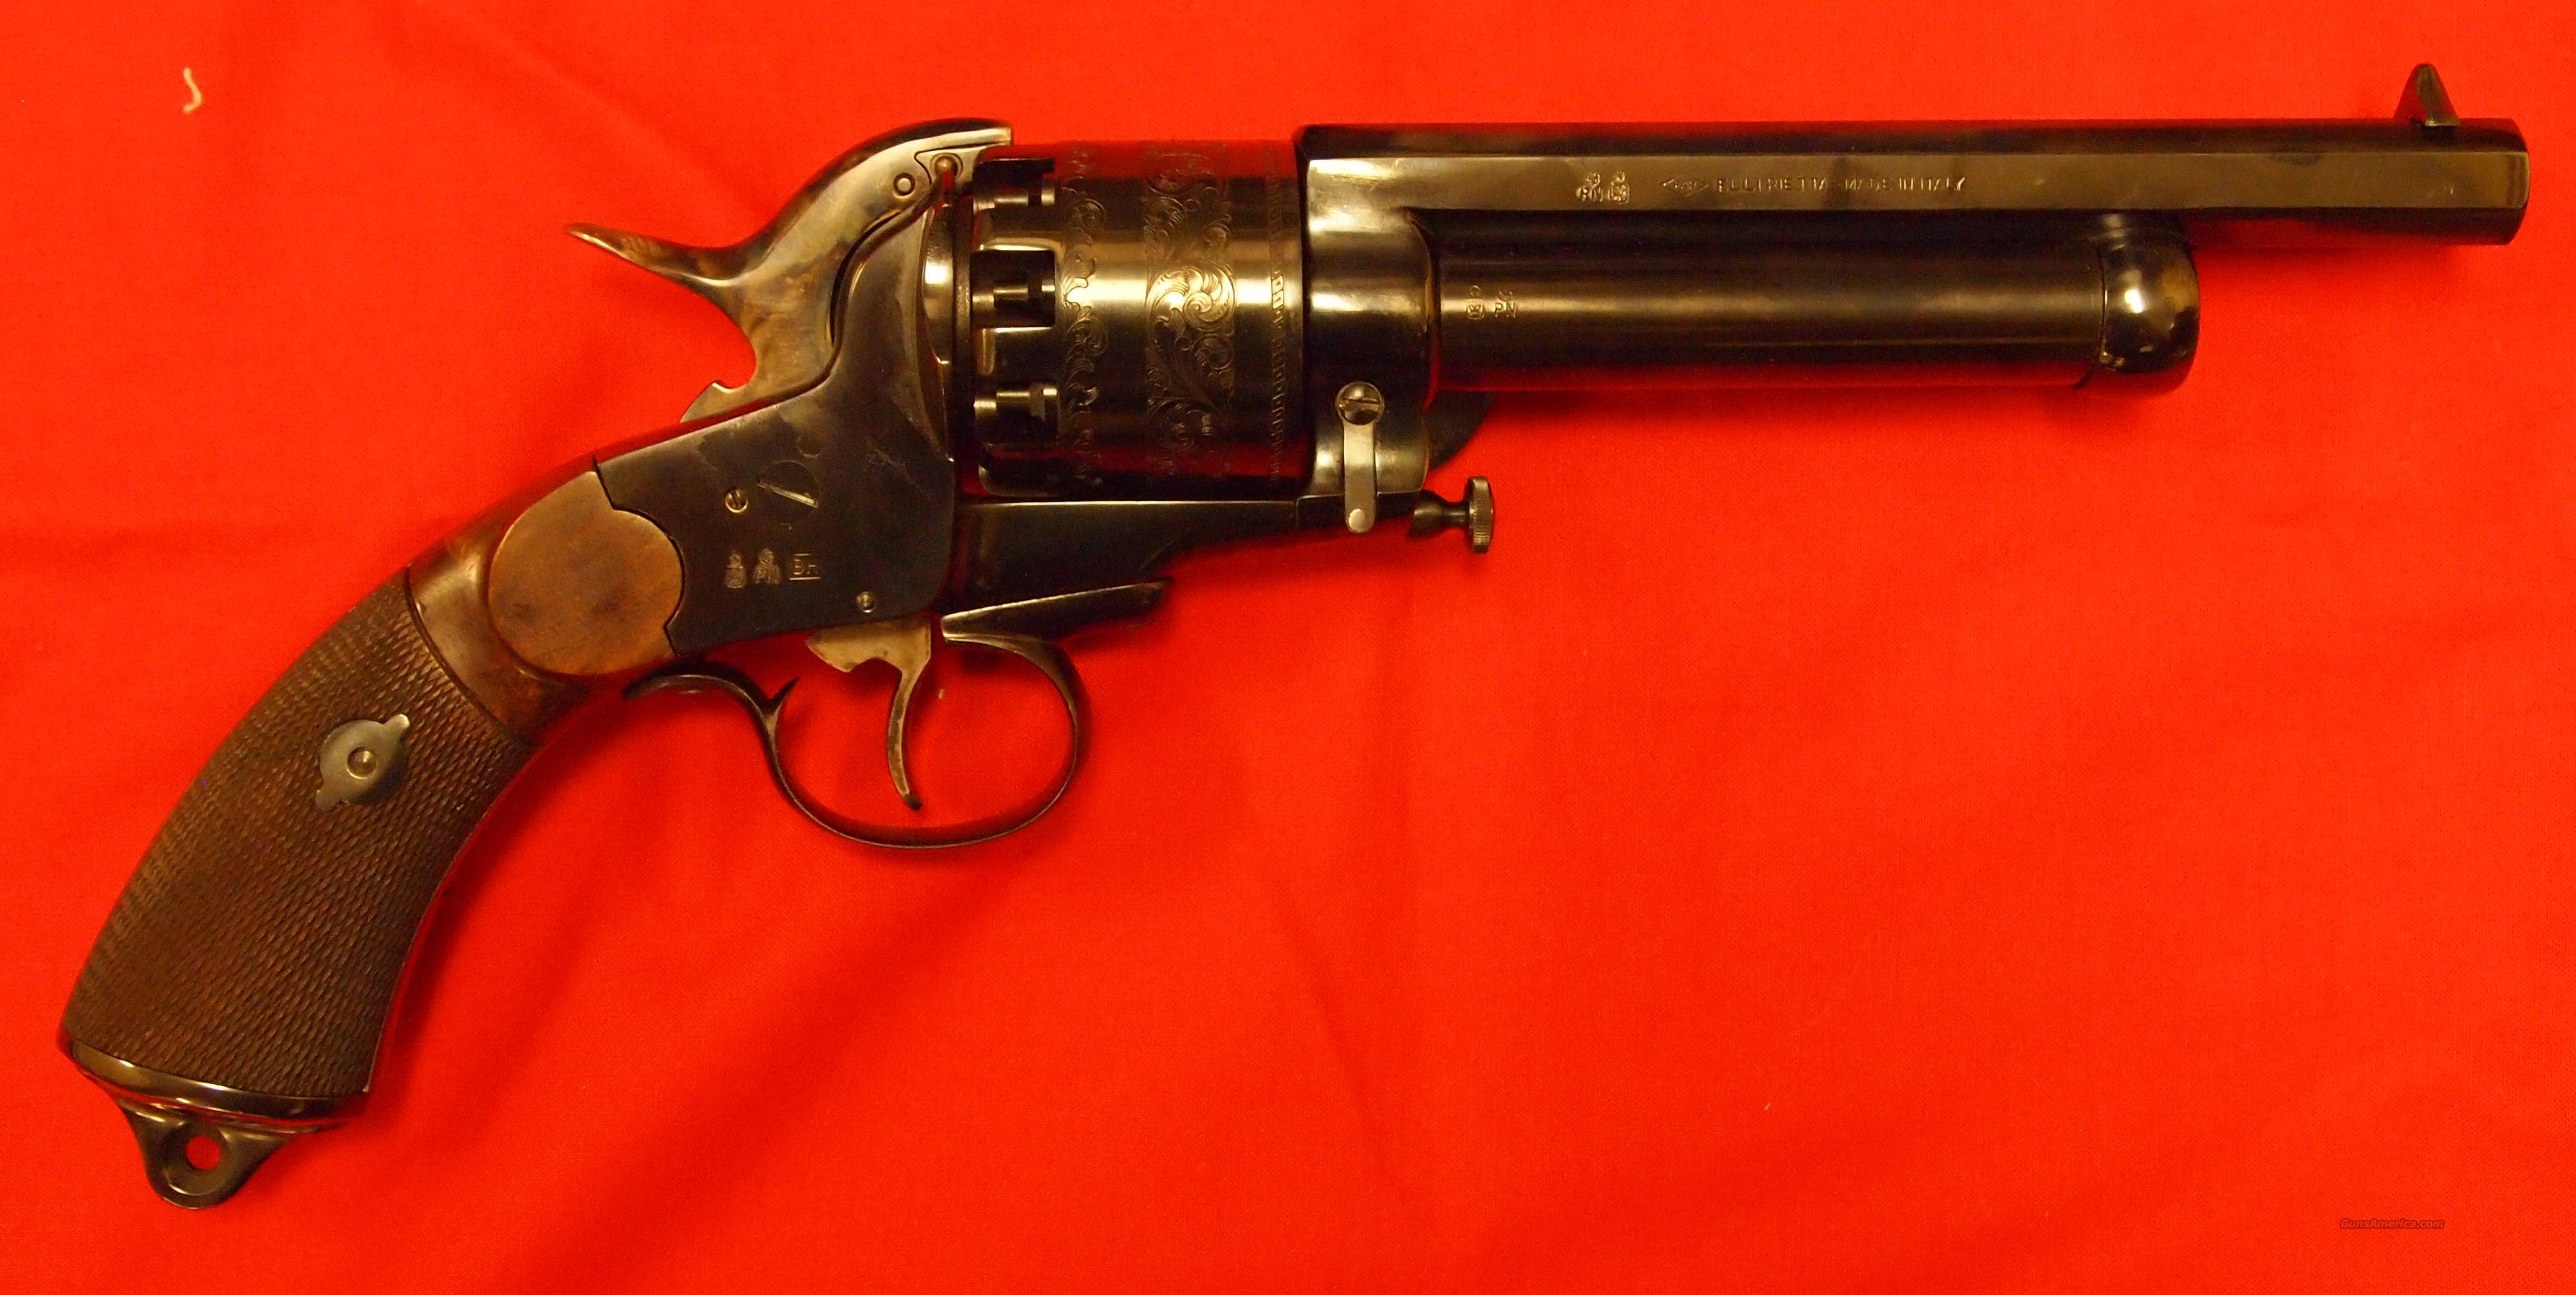 Le Mat Revolver .44/.65 Black Powder Pistol for sale